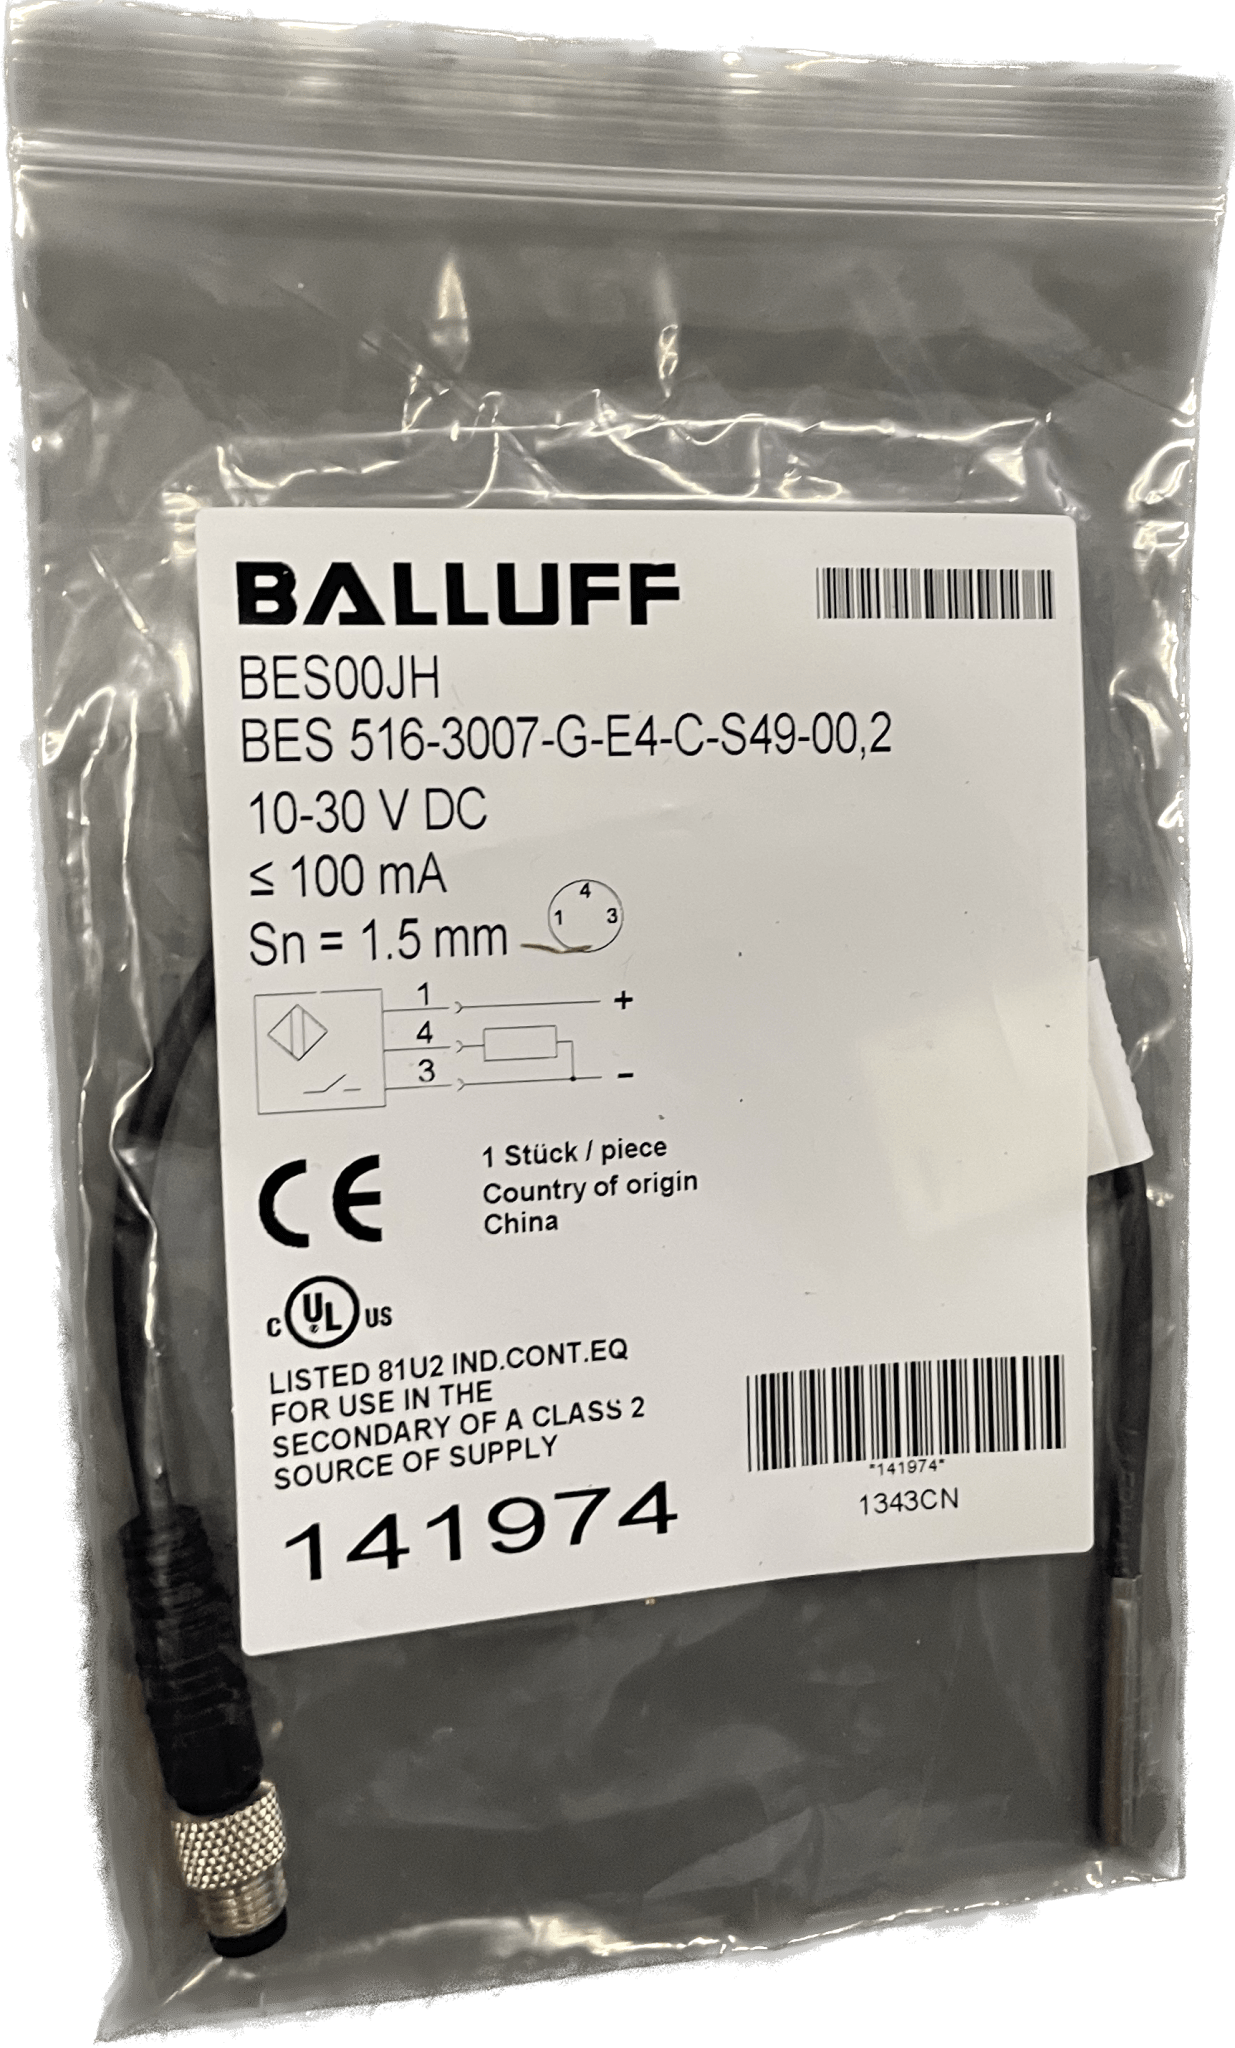 BALLUFFInduktive Standardsensoren mit Vorzugstypen BES 516-3007-G-E4-C-S49-00,2 - #product_category# | Klenk Maschinenhandel